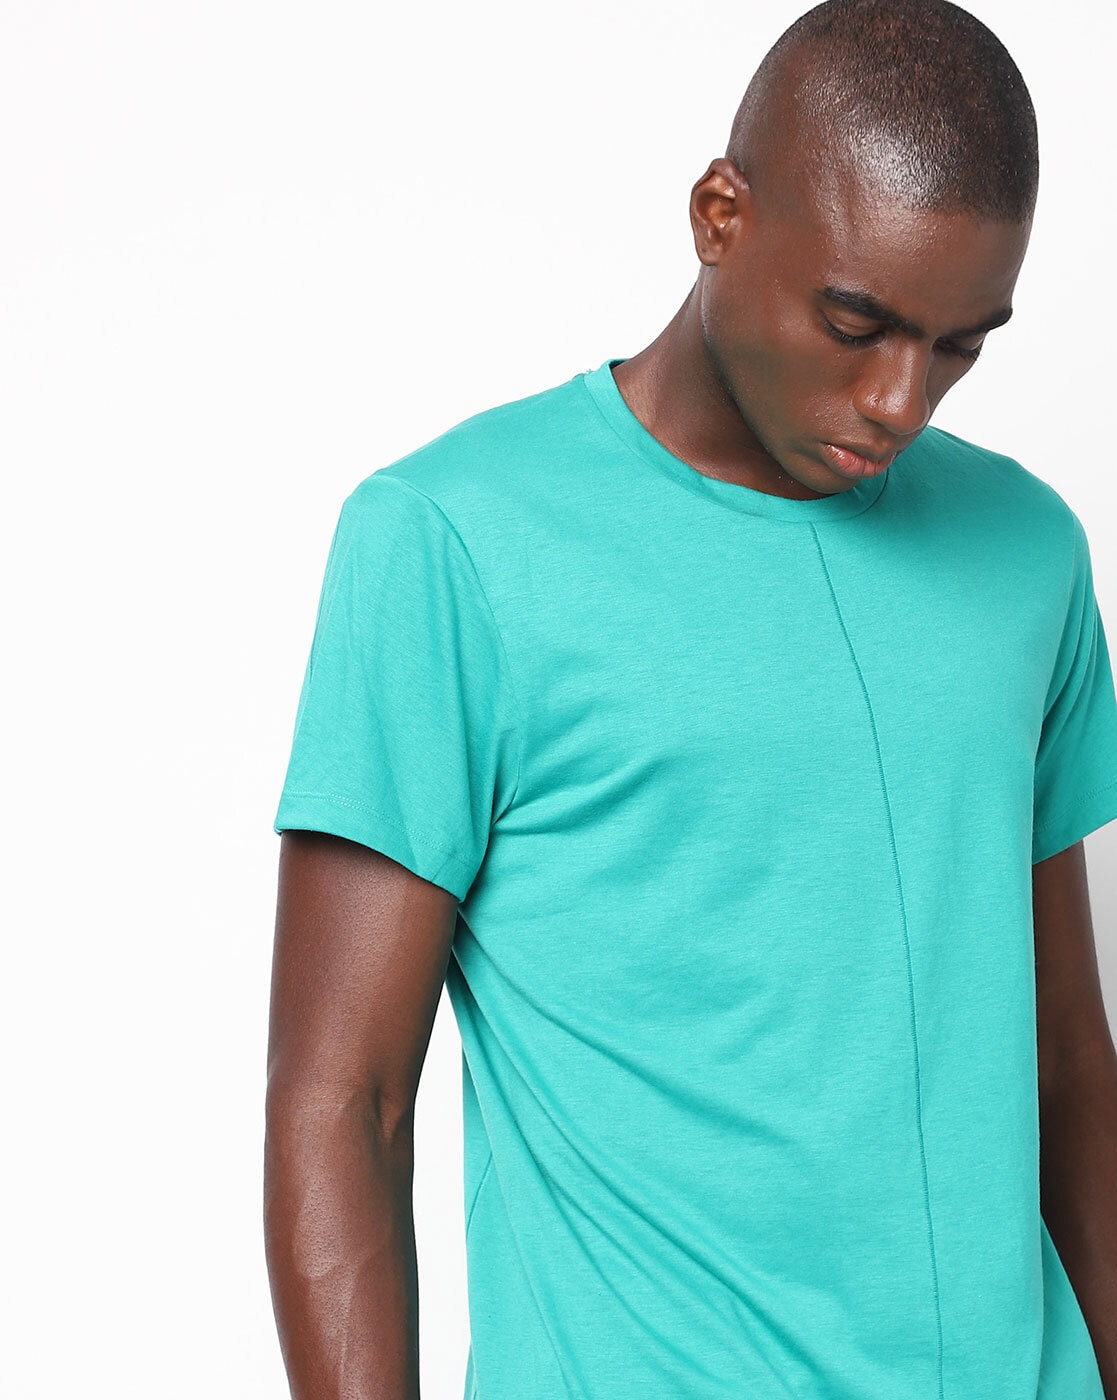 Green Nike Shirt Mens | estudioespositoymiguel.com.ar